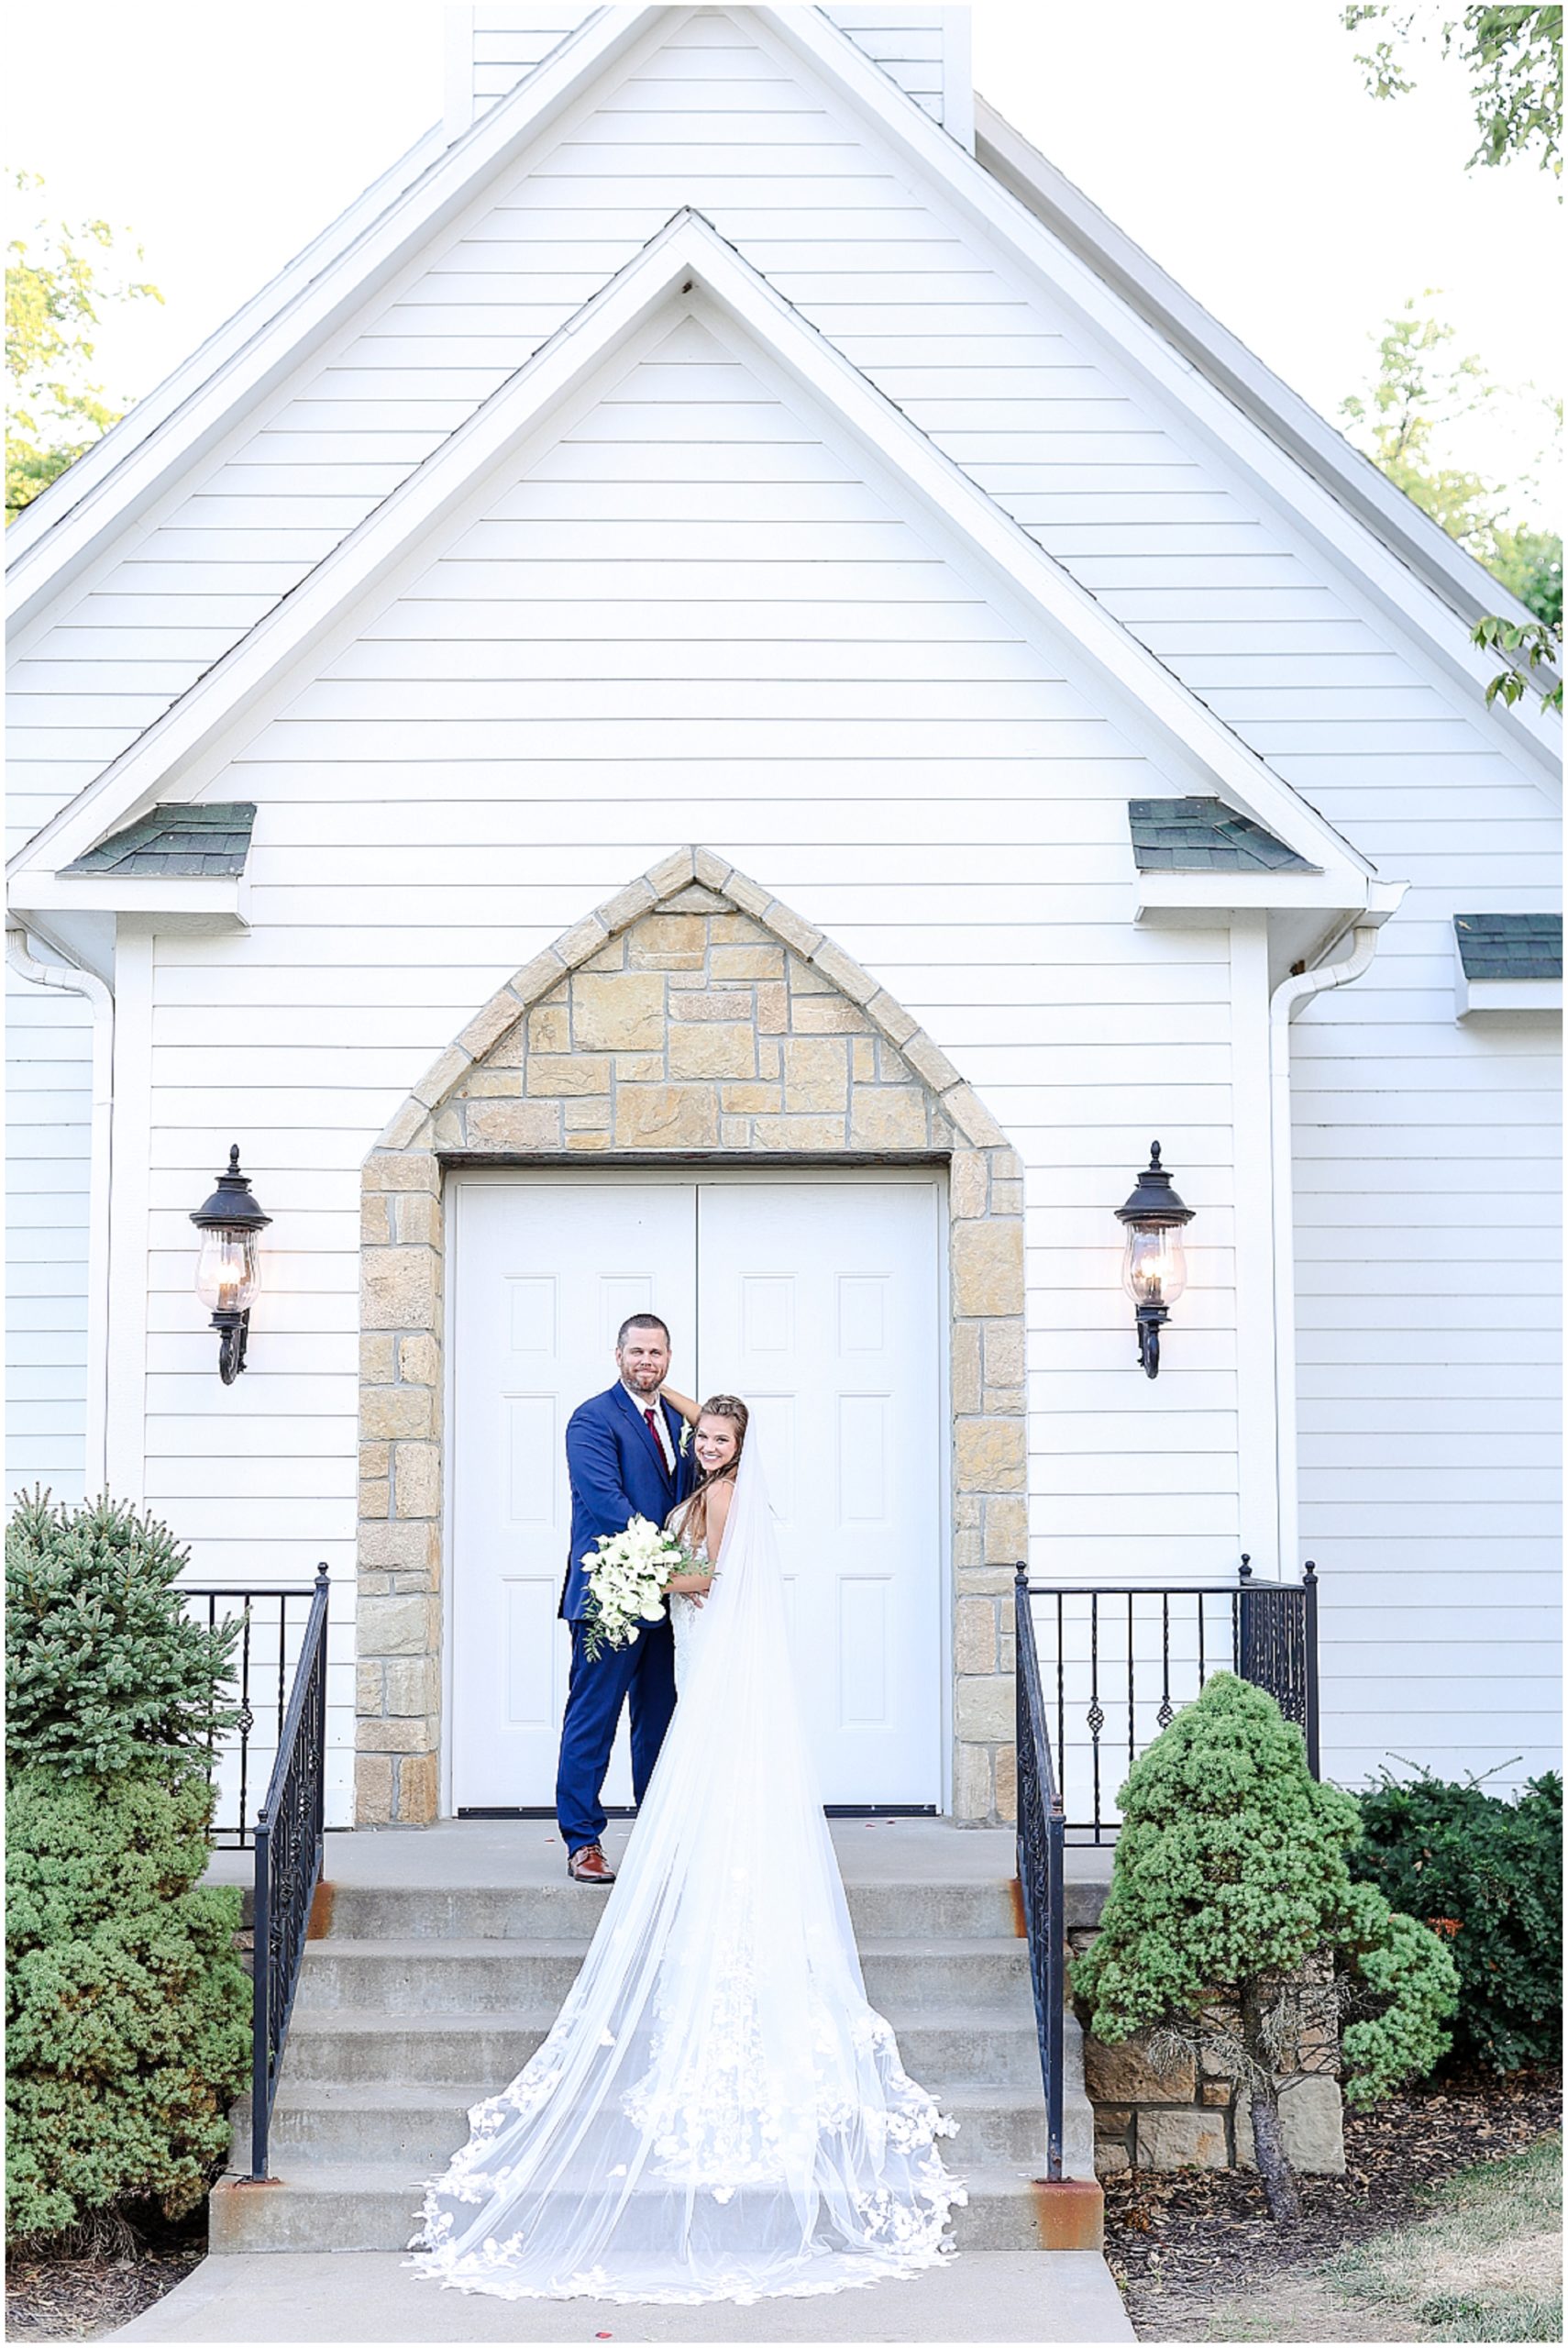 Hawthorne House Chapel - Wedding Photographer 